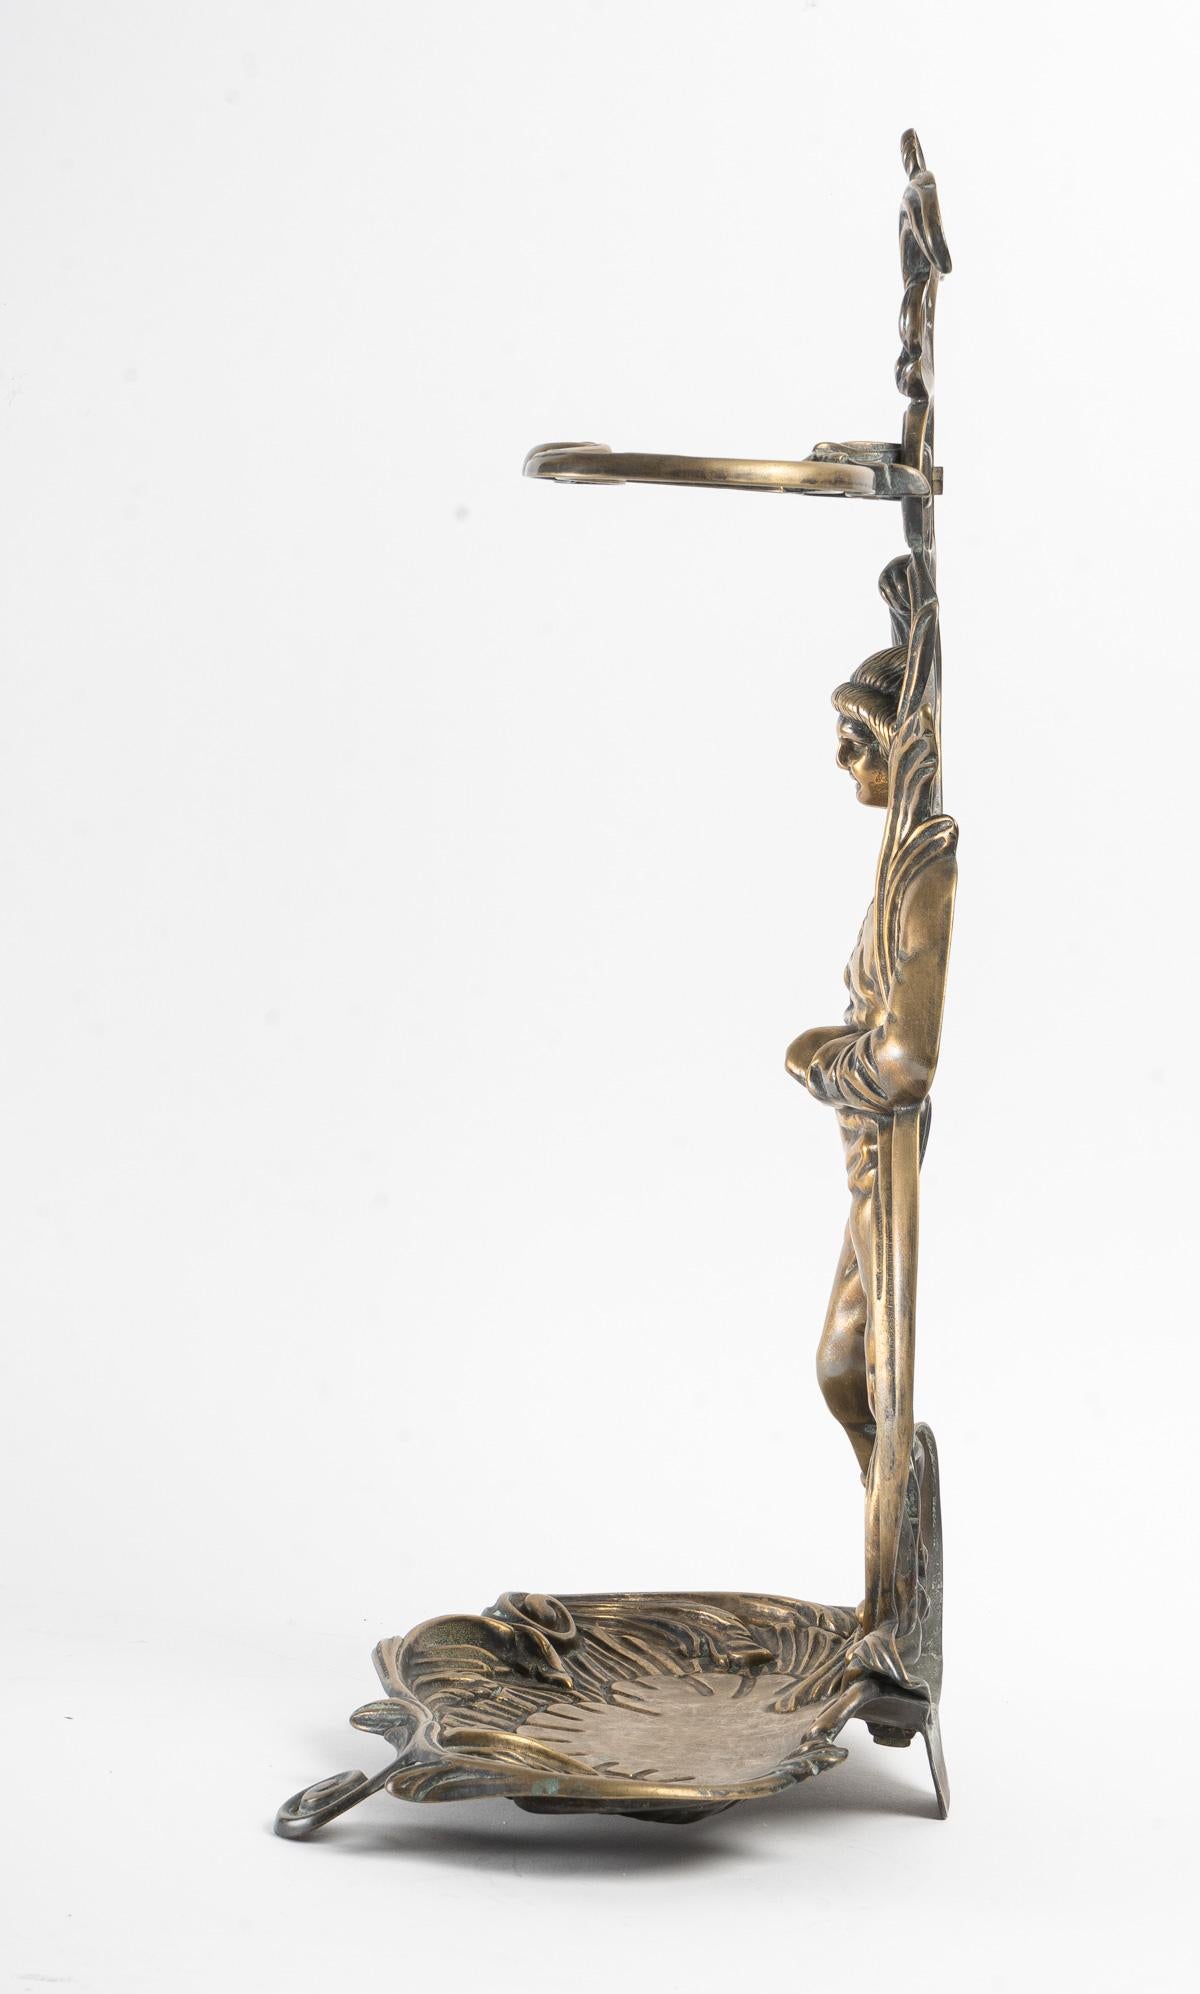 Bronze umbrella stand, early 20th century
Measures: H: 59 cm, W: 33 cm, D: 22 cm.